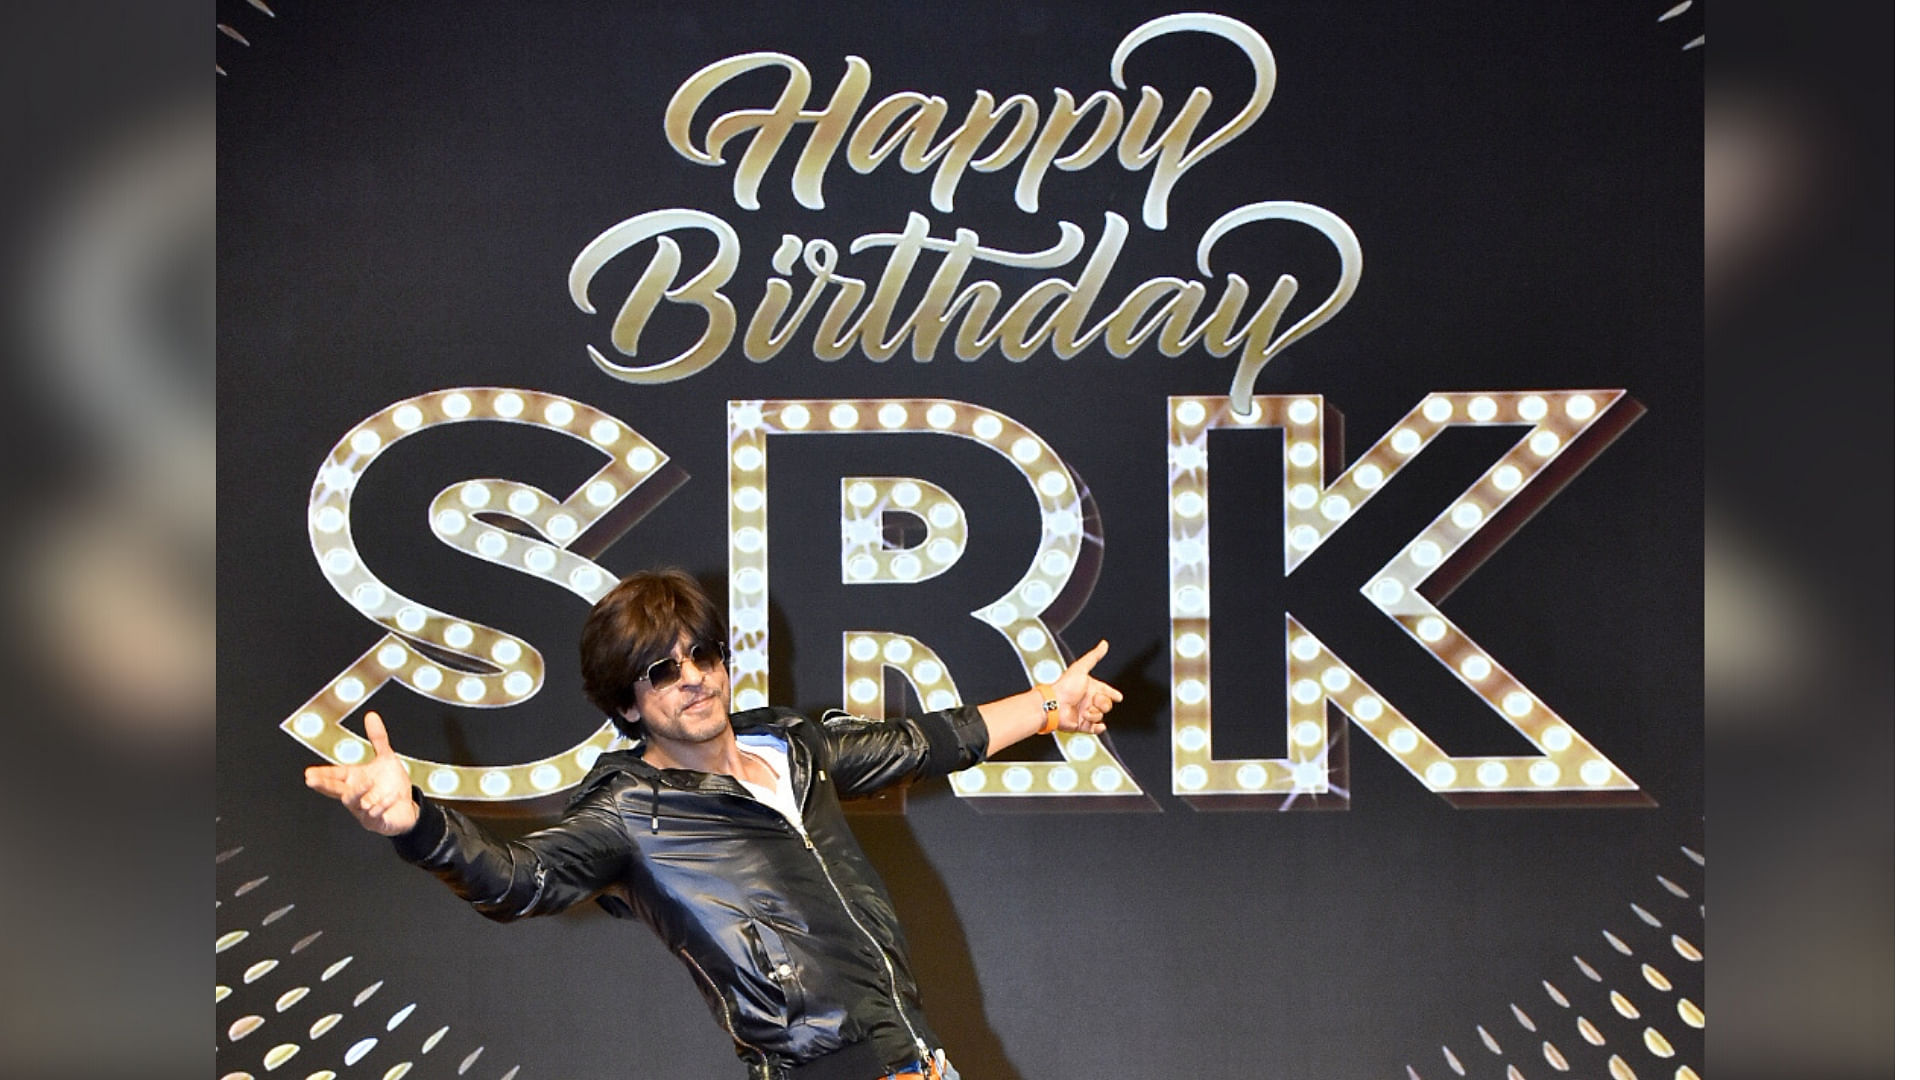 Shah Rukh Khan at his birthday event.